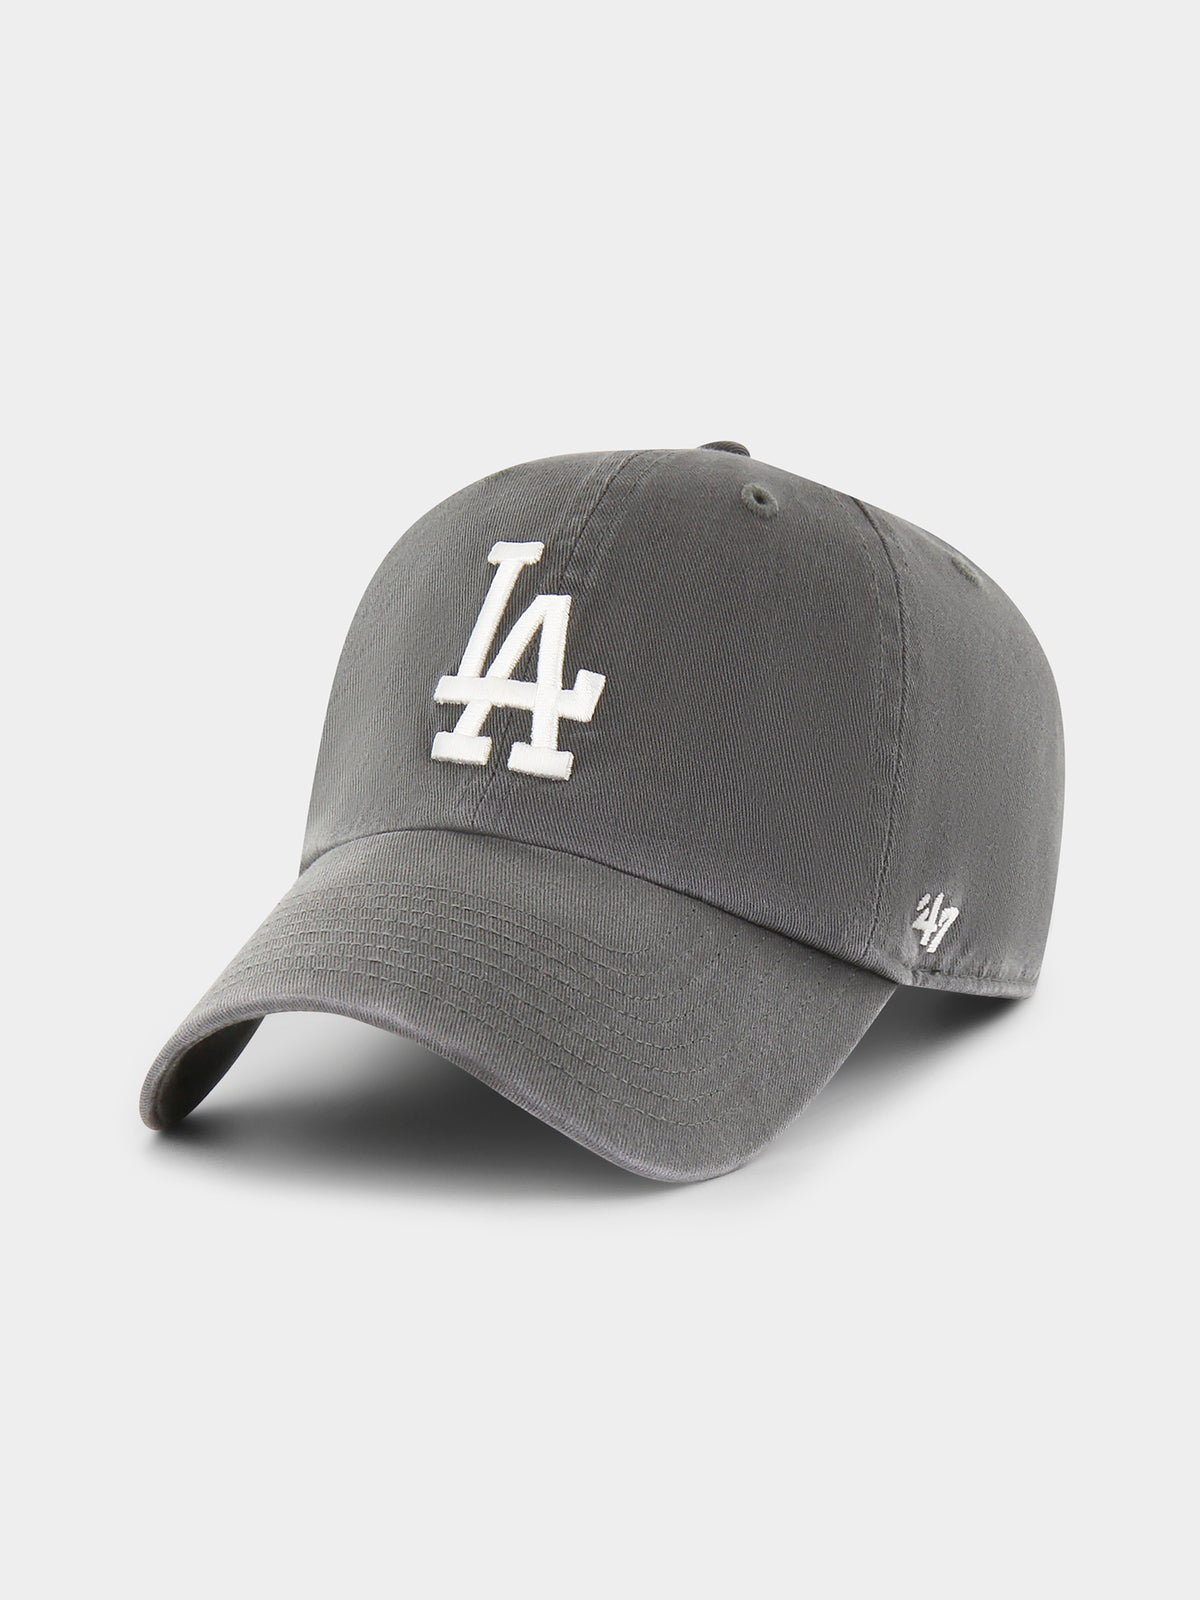 Base Runner Los Angeles Dodgers Baseball Cap in Charcoal Grey